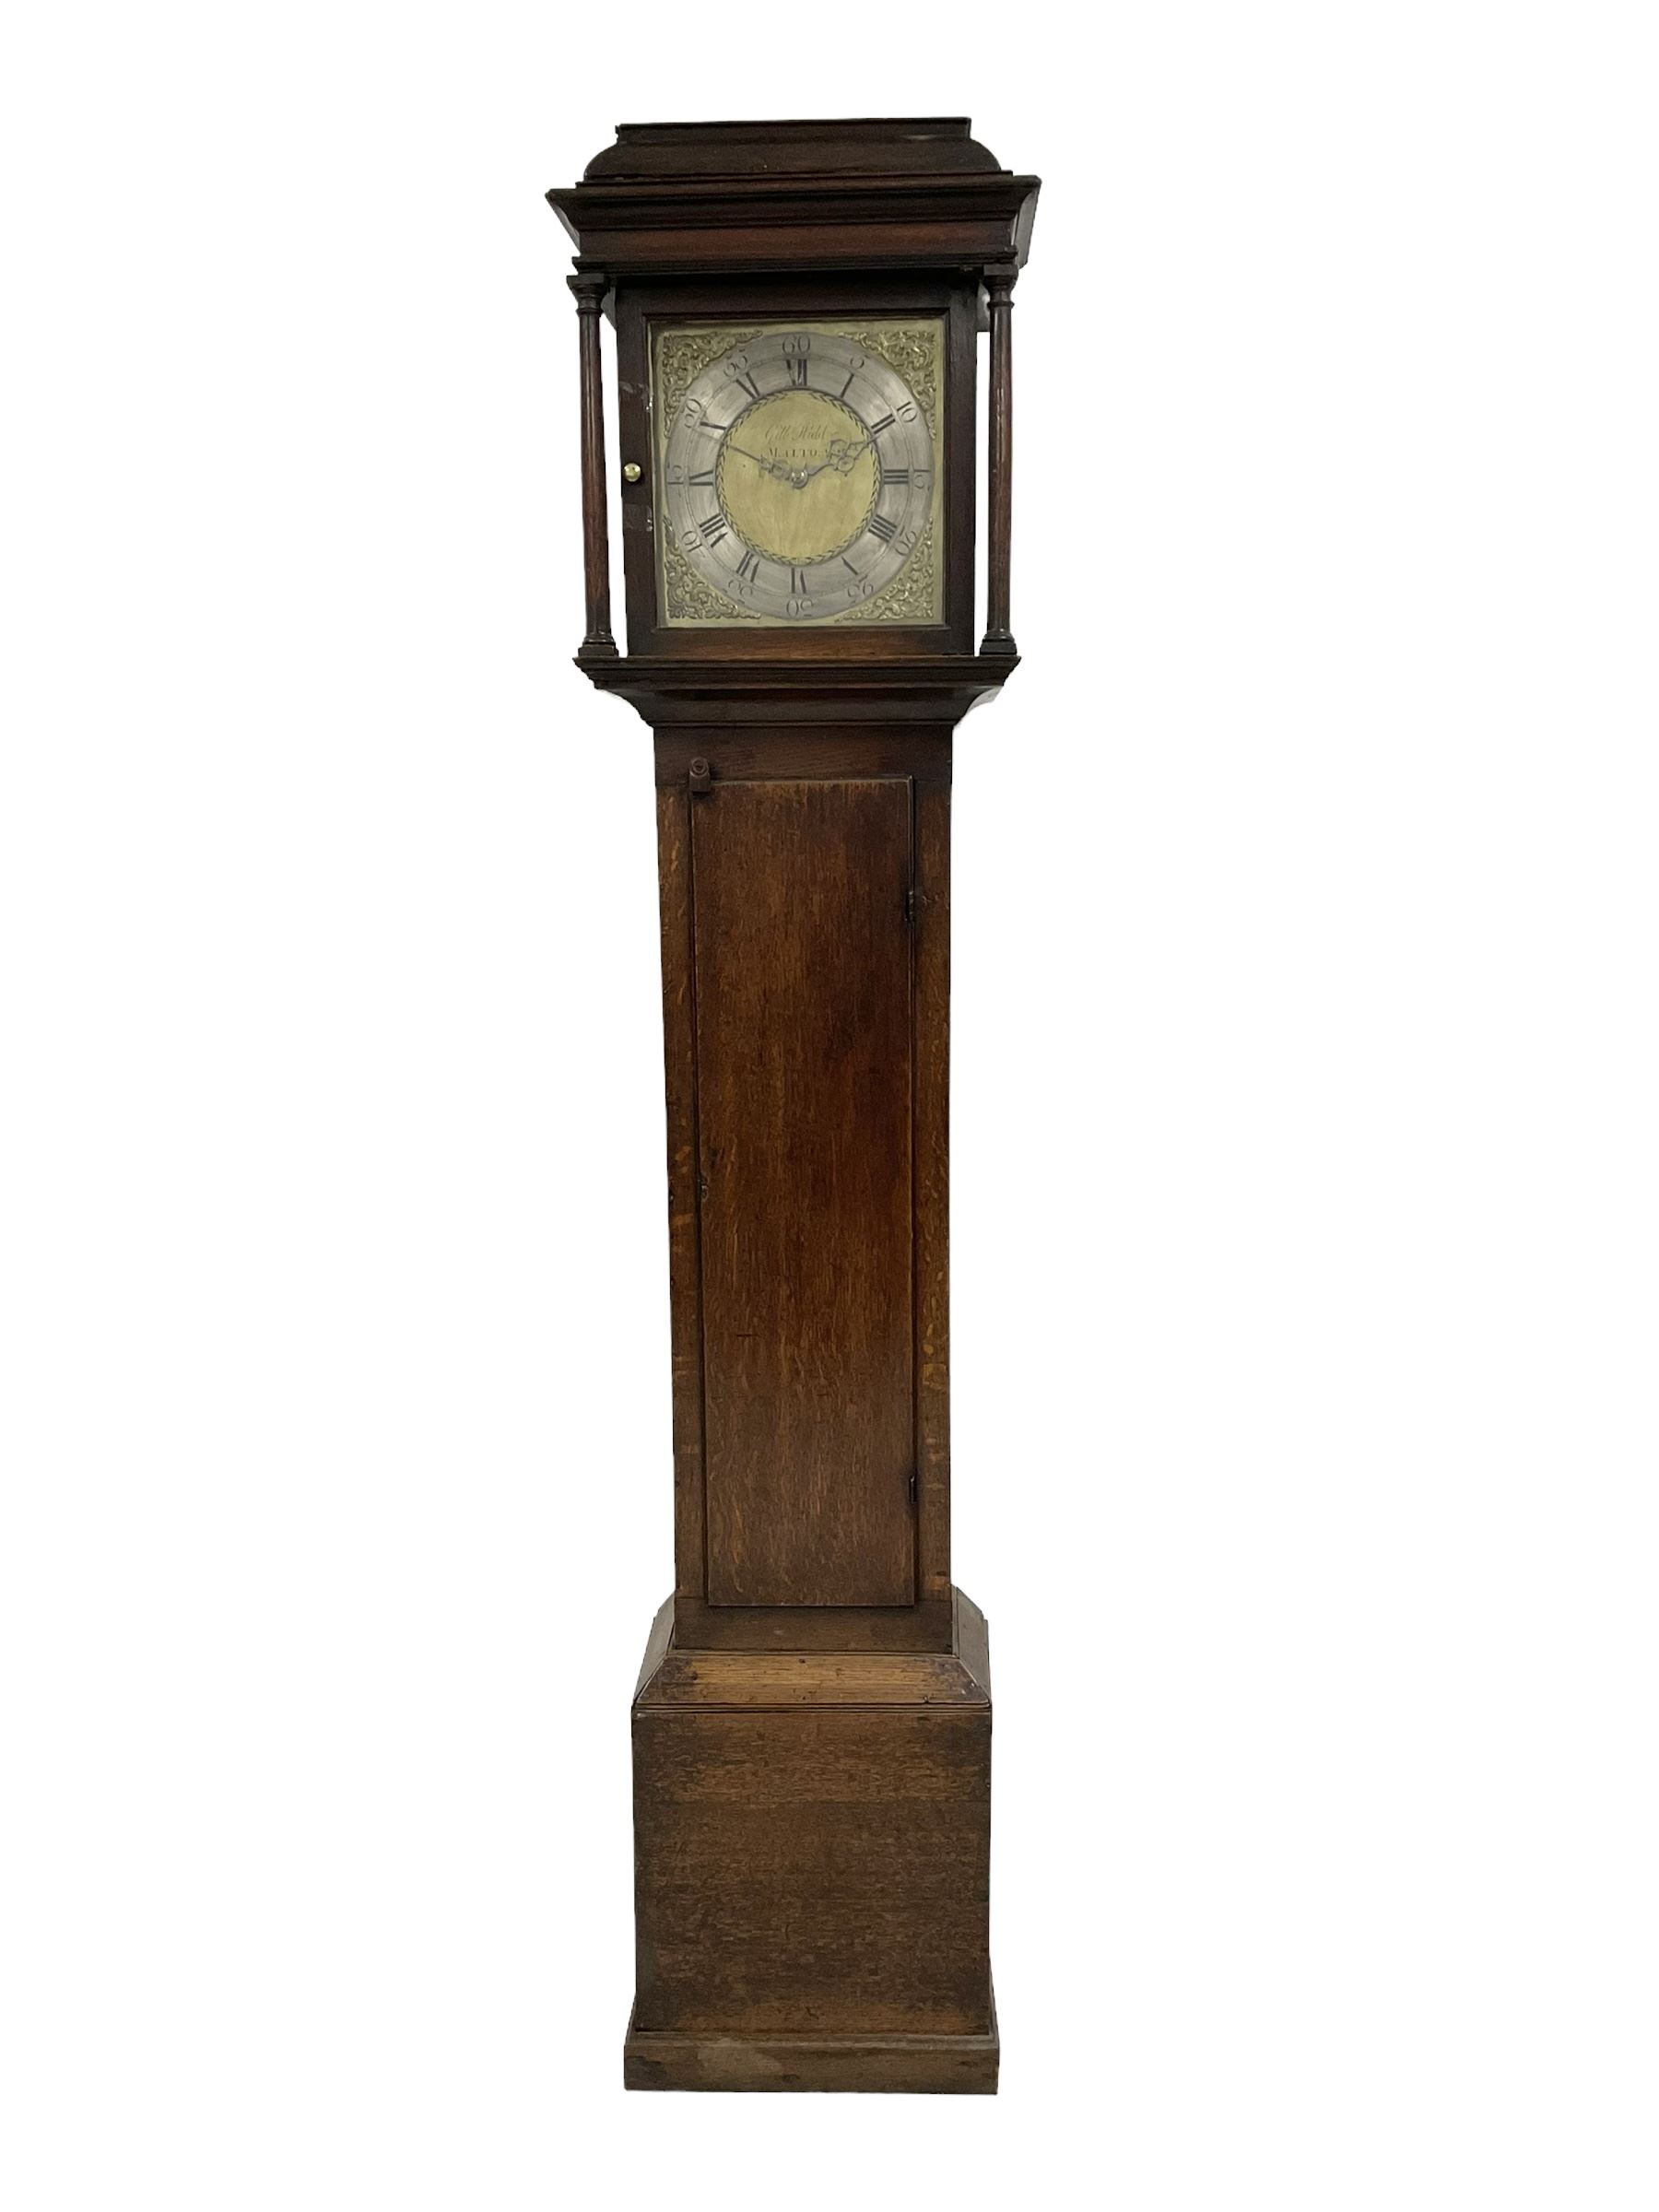 Gilbert Kidd of Malton - 30-hour 18th-century oak-cased longcase clock